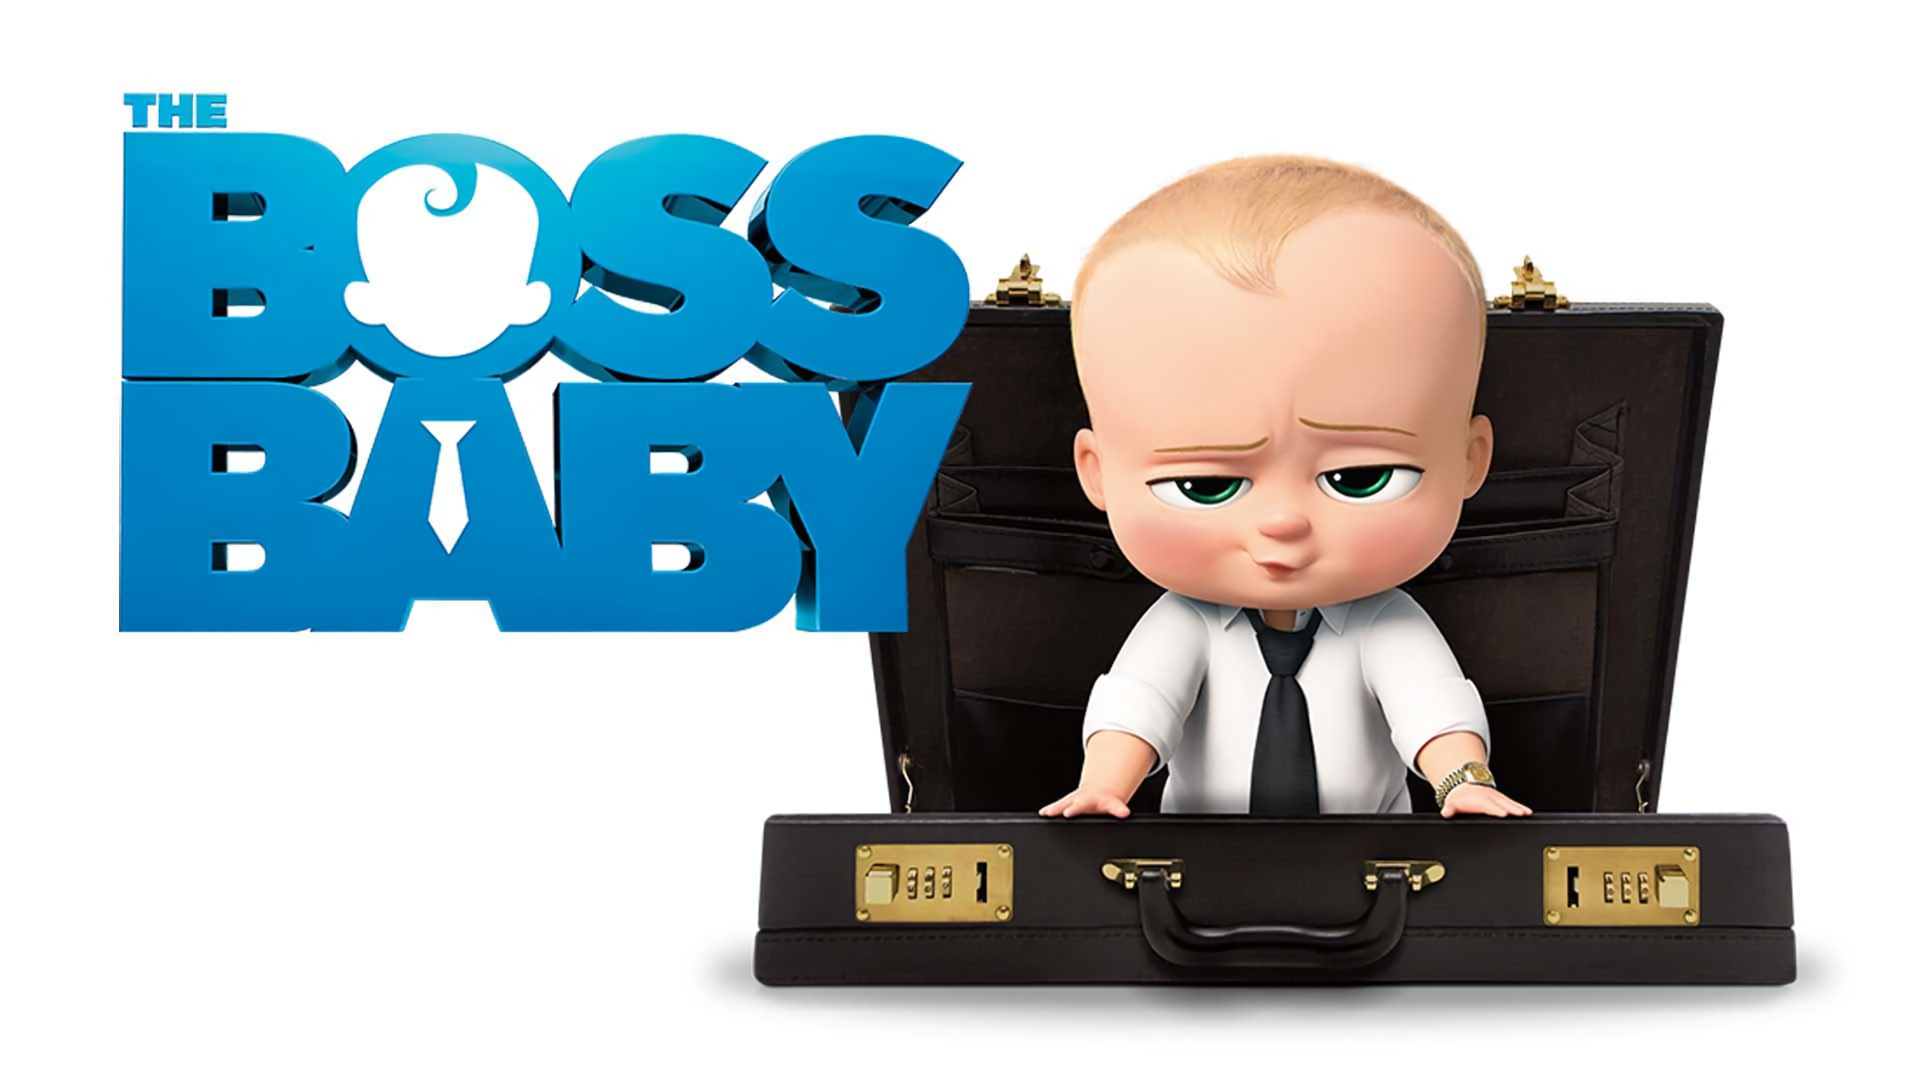 Movie The Boss Baby HD Wallpaper